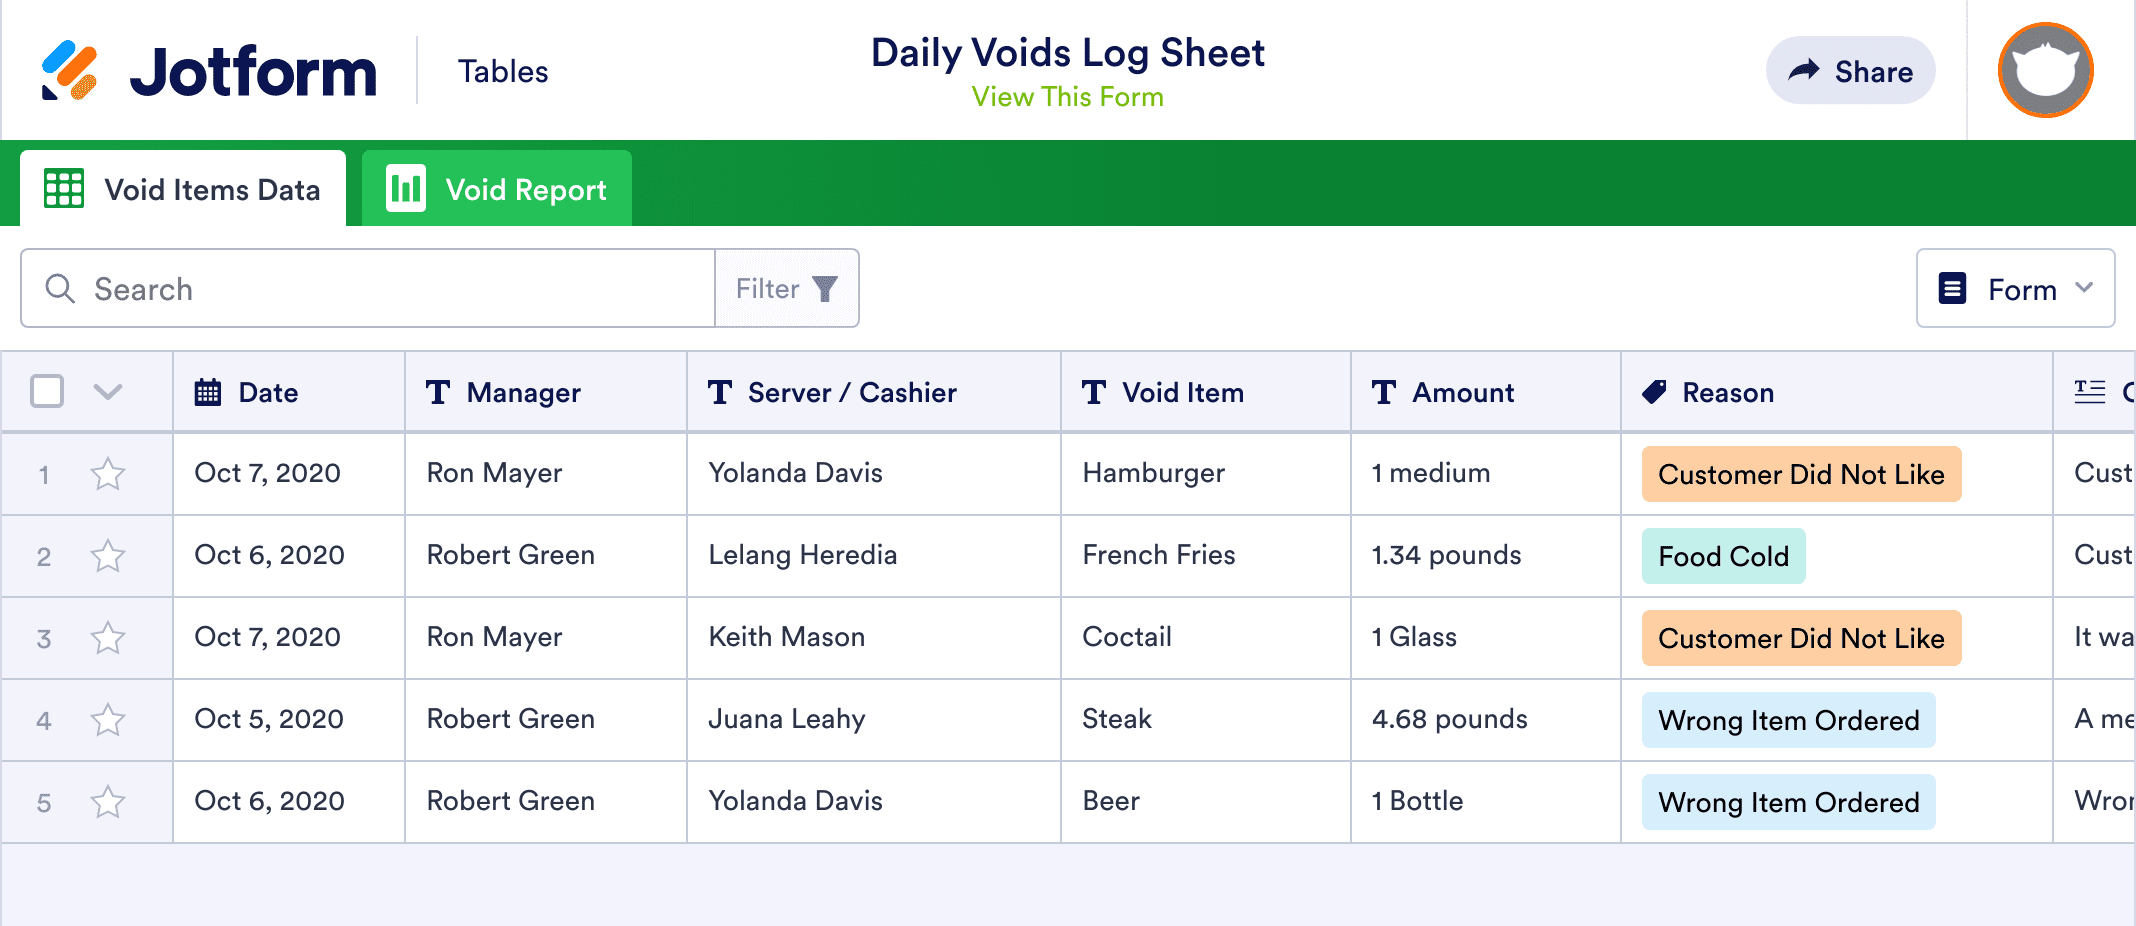 Daily Voids Log Sheet